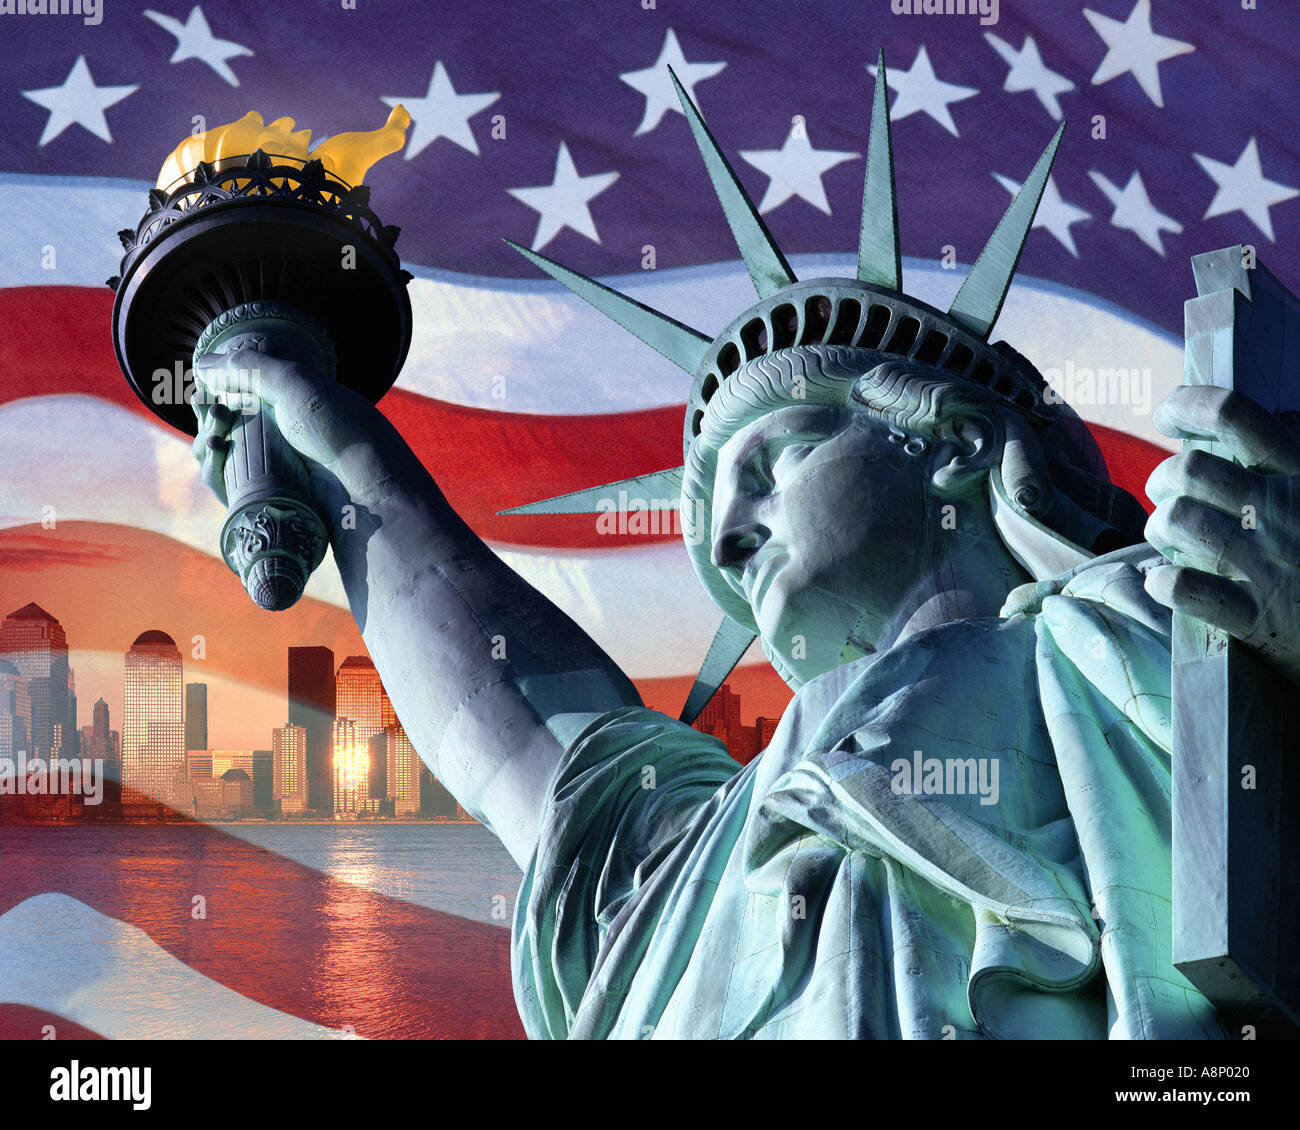 USA - NEW YORK: Americana Concept Stock Photo